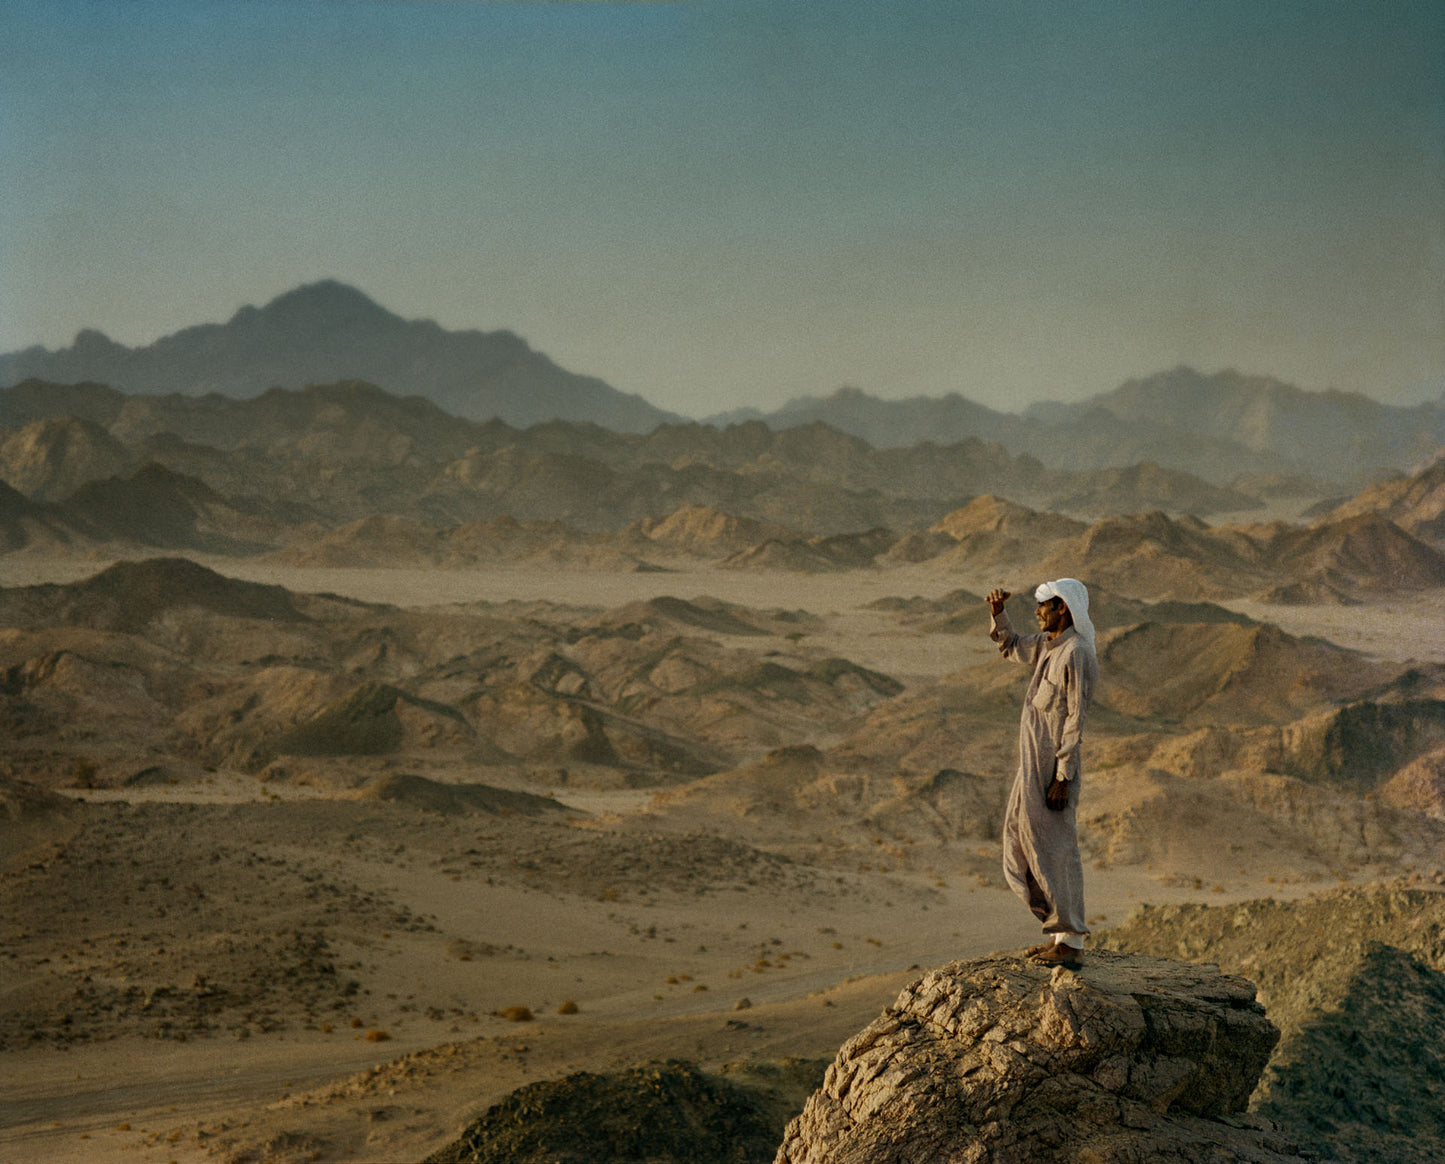 Mohammed The Beduin in The Sinai, Egypt